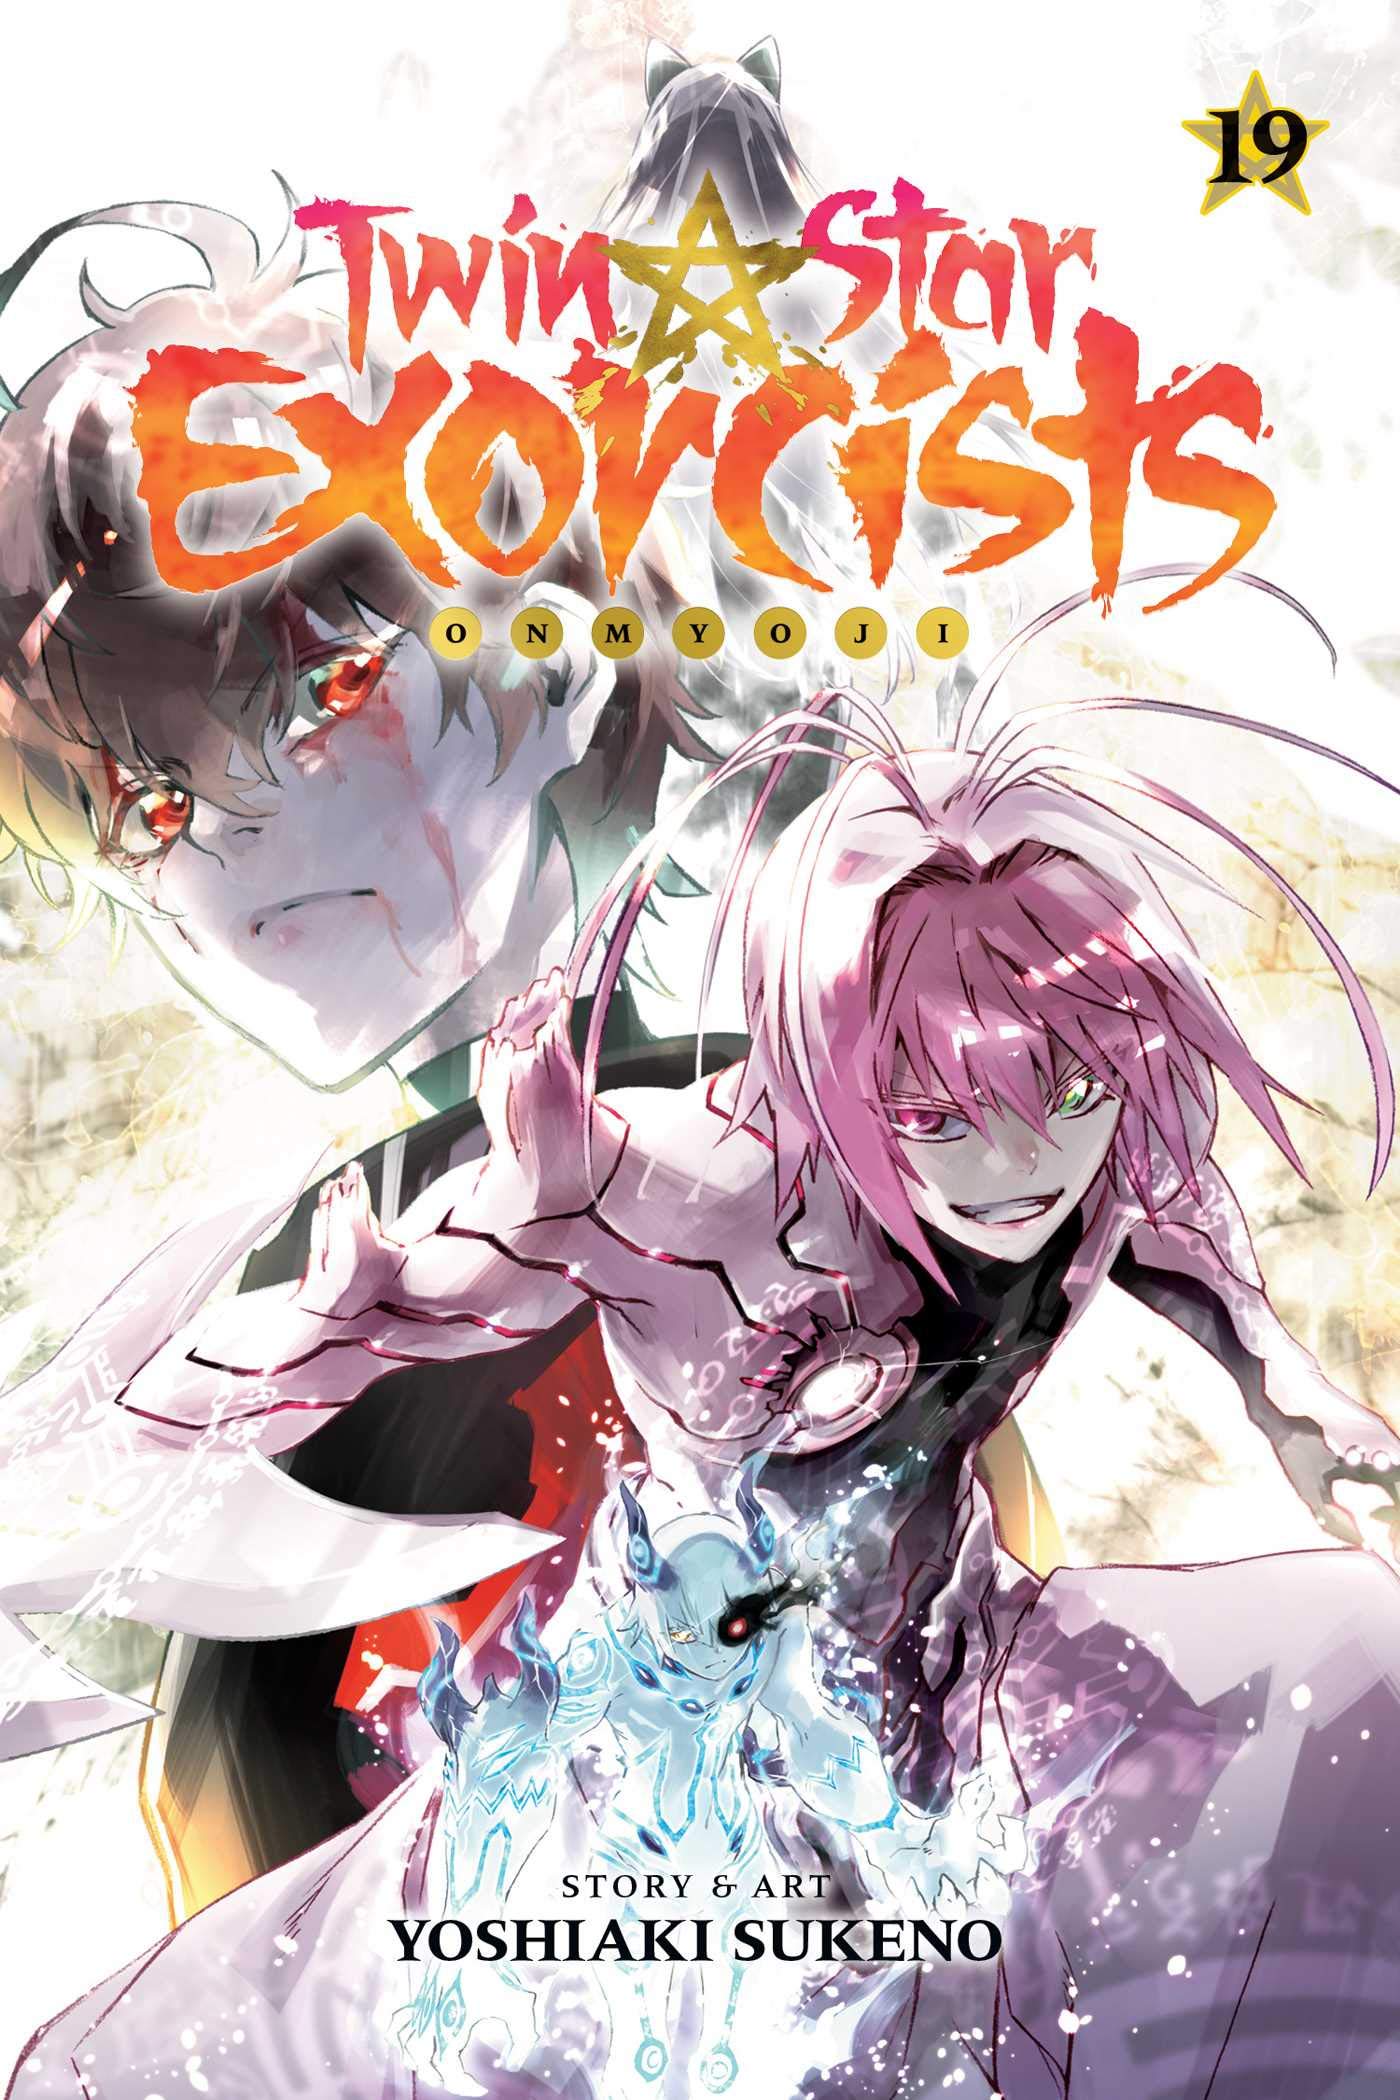 Twin Star Exorcists: Onmyoji - Volume 19 | Yoshiaki Sukeno